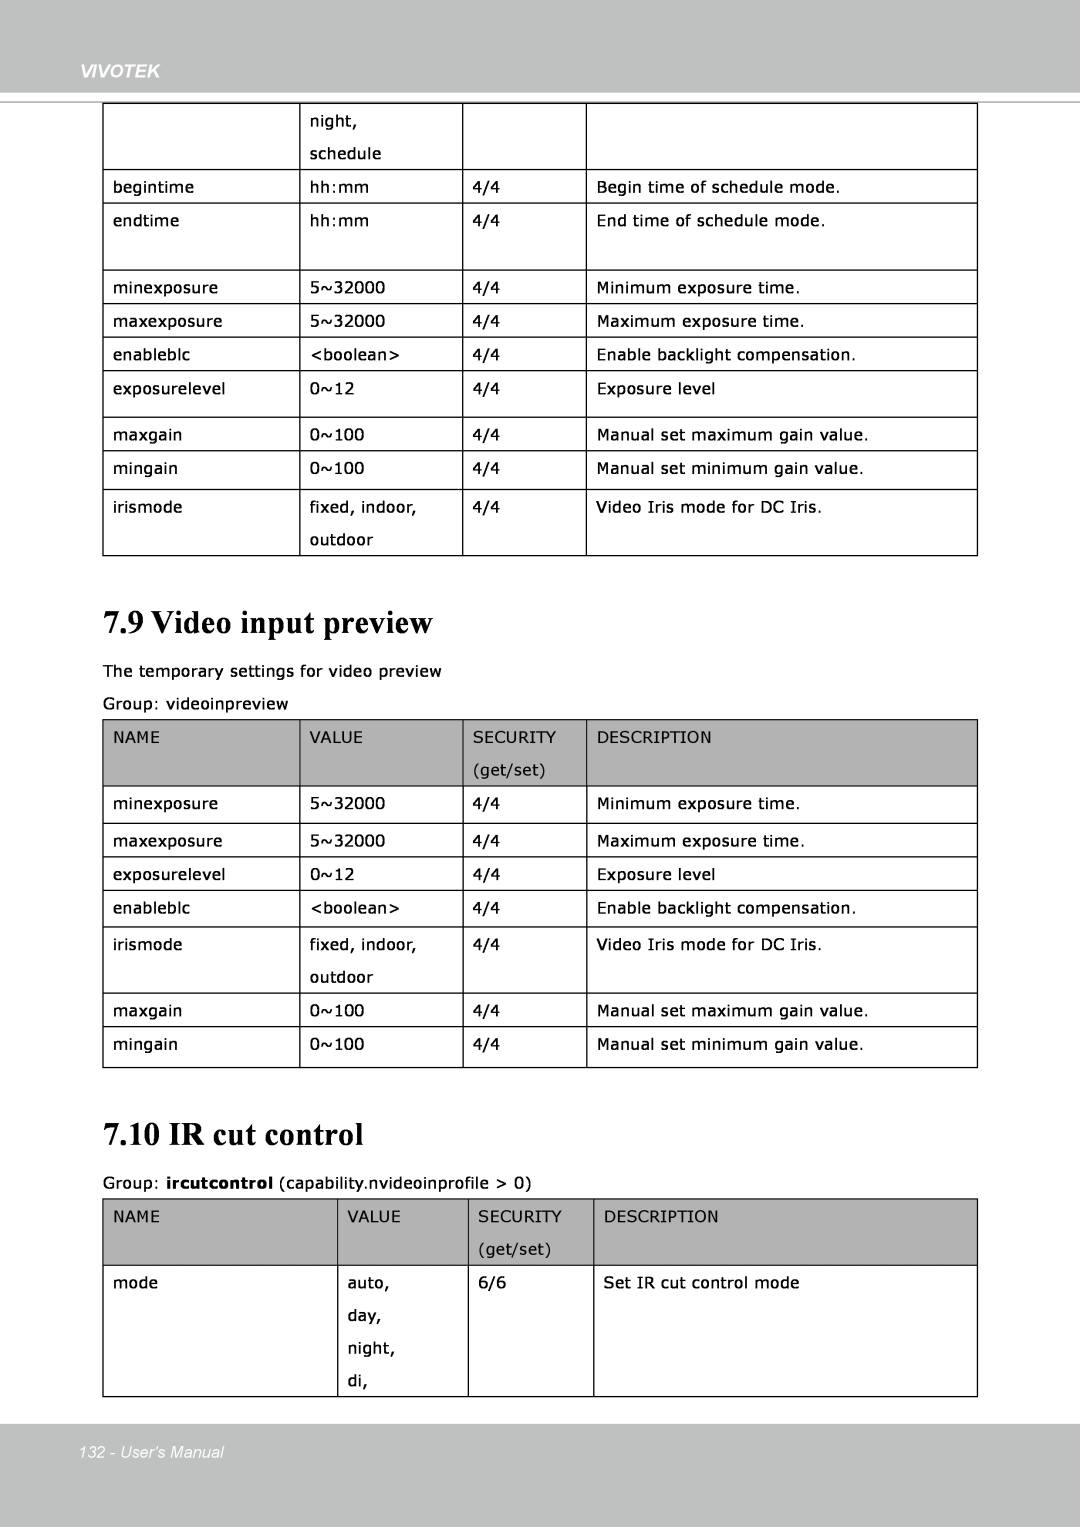 Vivotek IP8352 manual Video input preview, IR cut control, Vivotek, Users Manual 